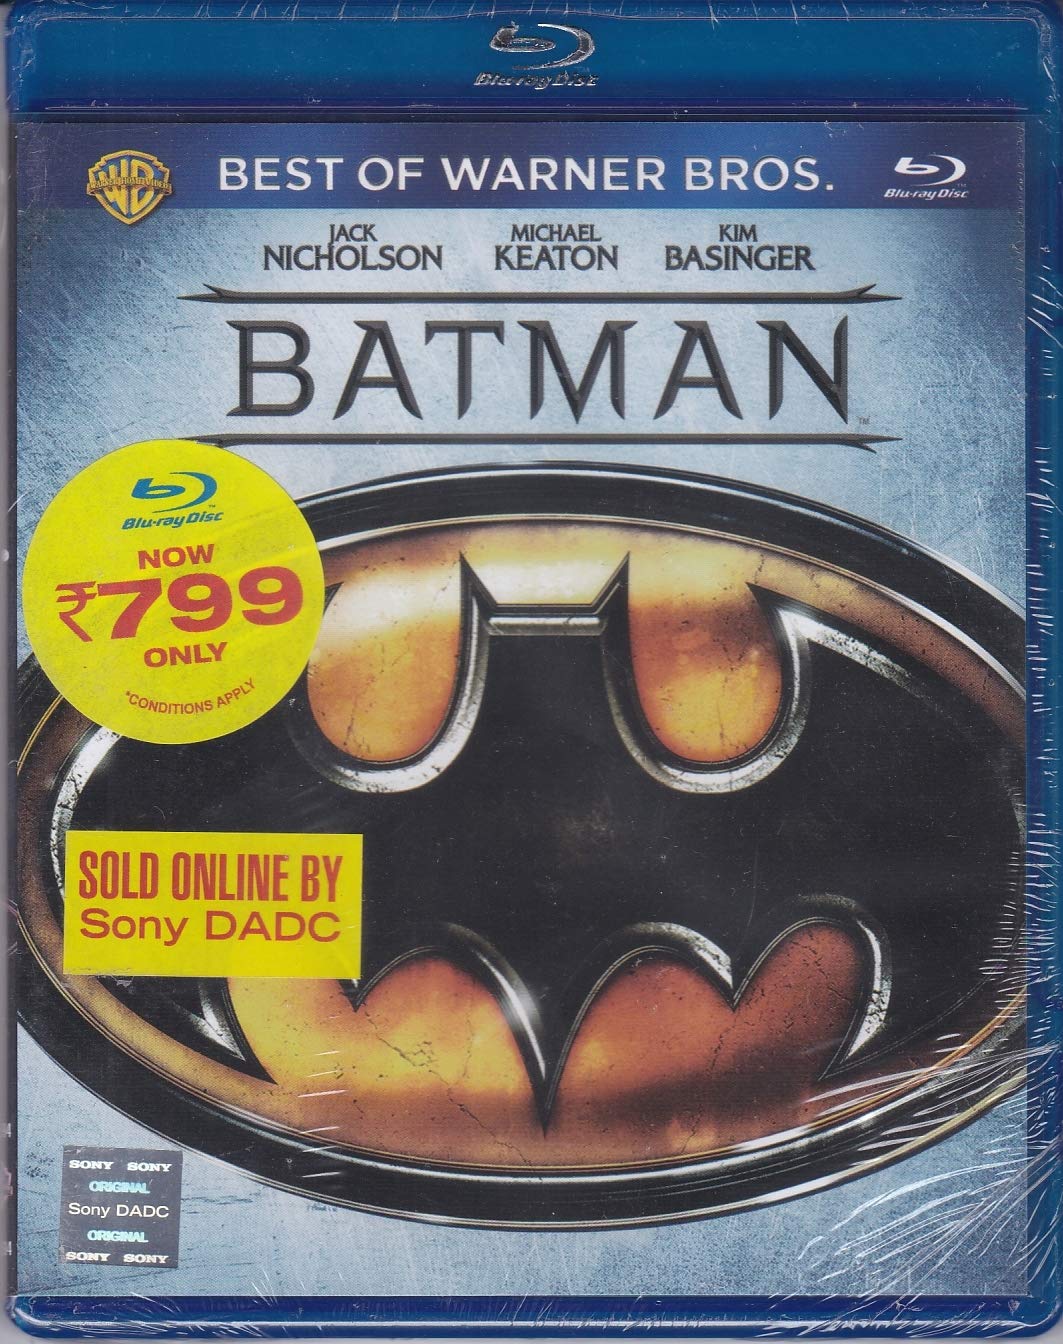 blu-ray-batman-best-of-warner-bros-movie-purchase-or-watch-online